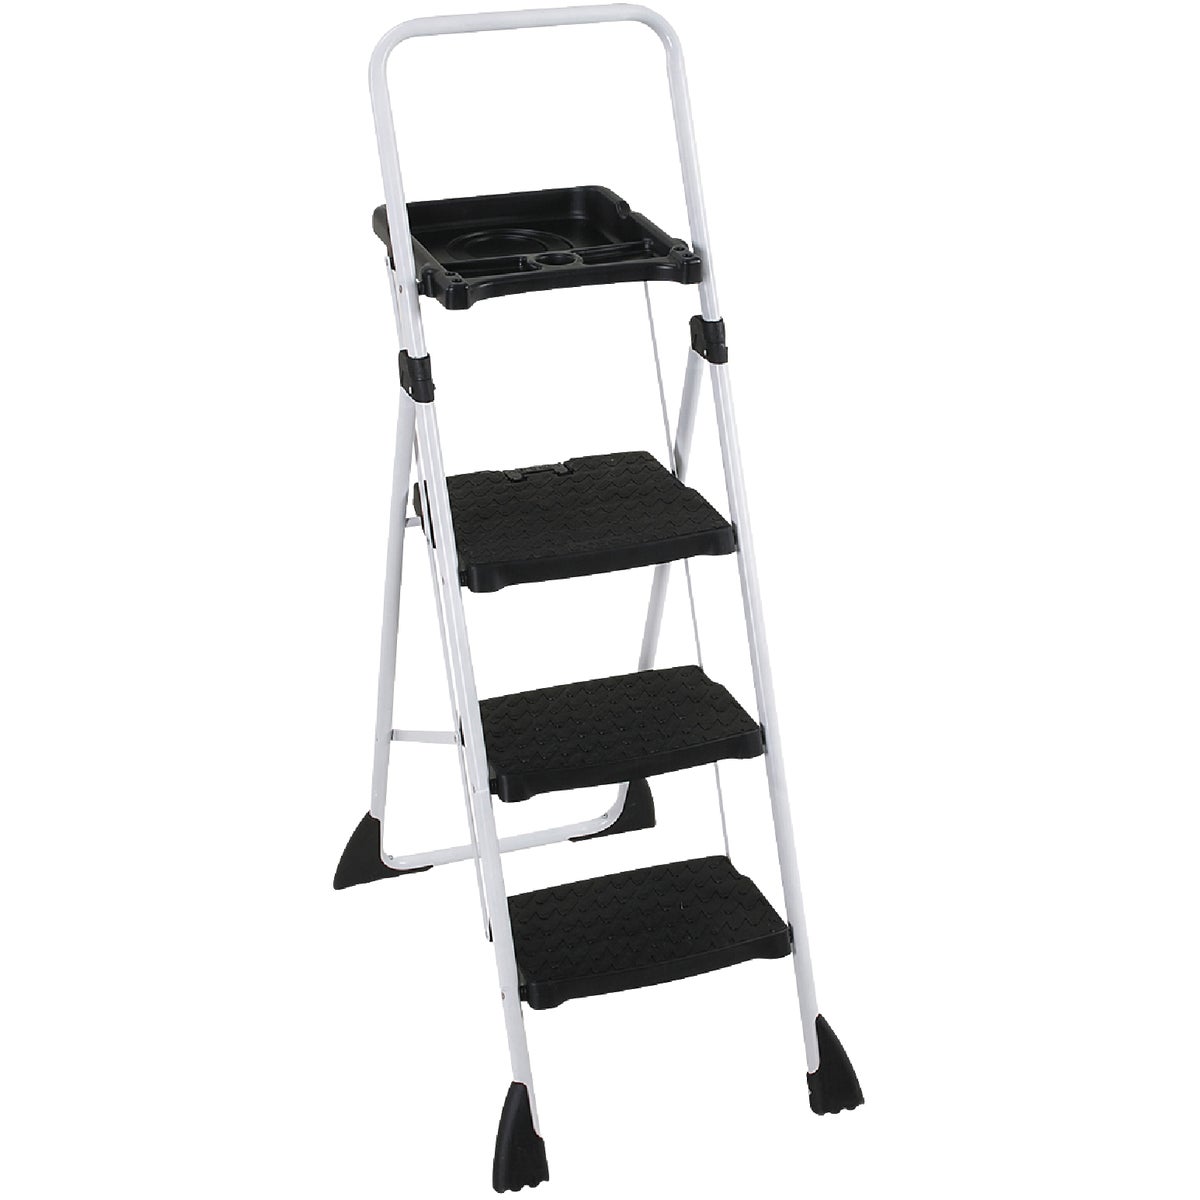 Cosco TriStepPlus Tubular Steel Platform Ladder with 225 Lb. Load Capacity Type II Ladder Rating 